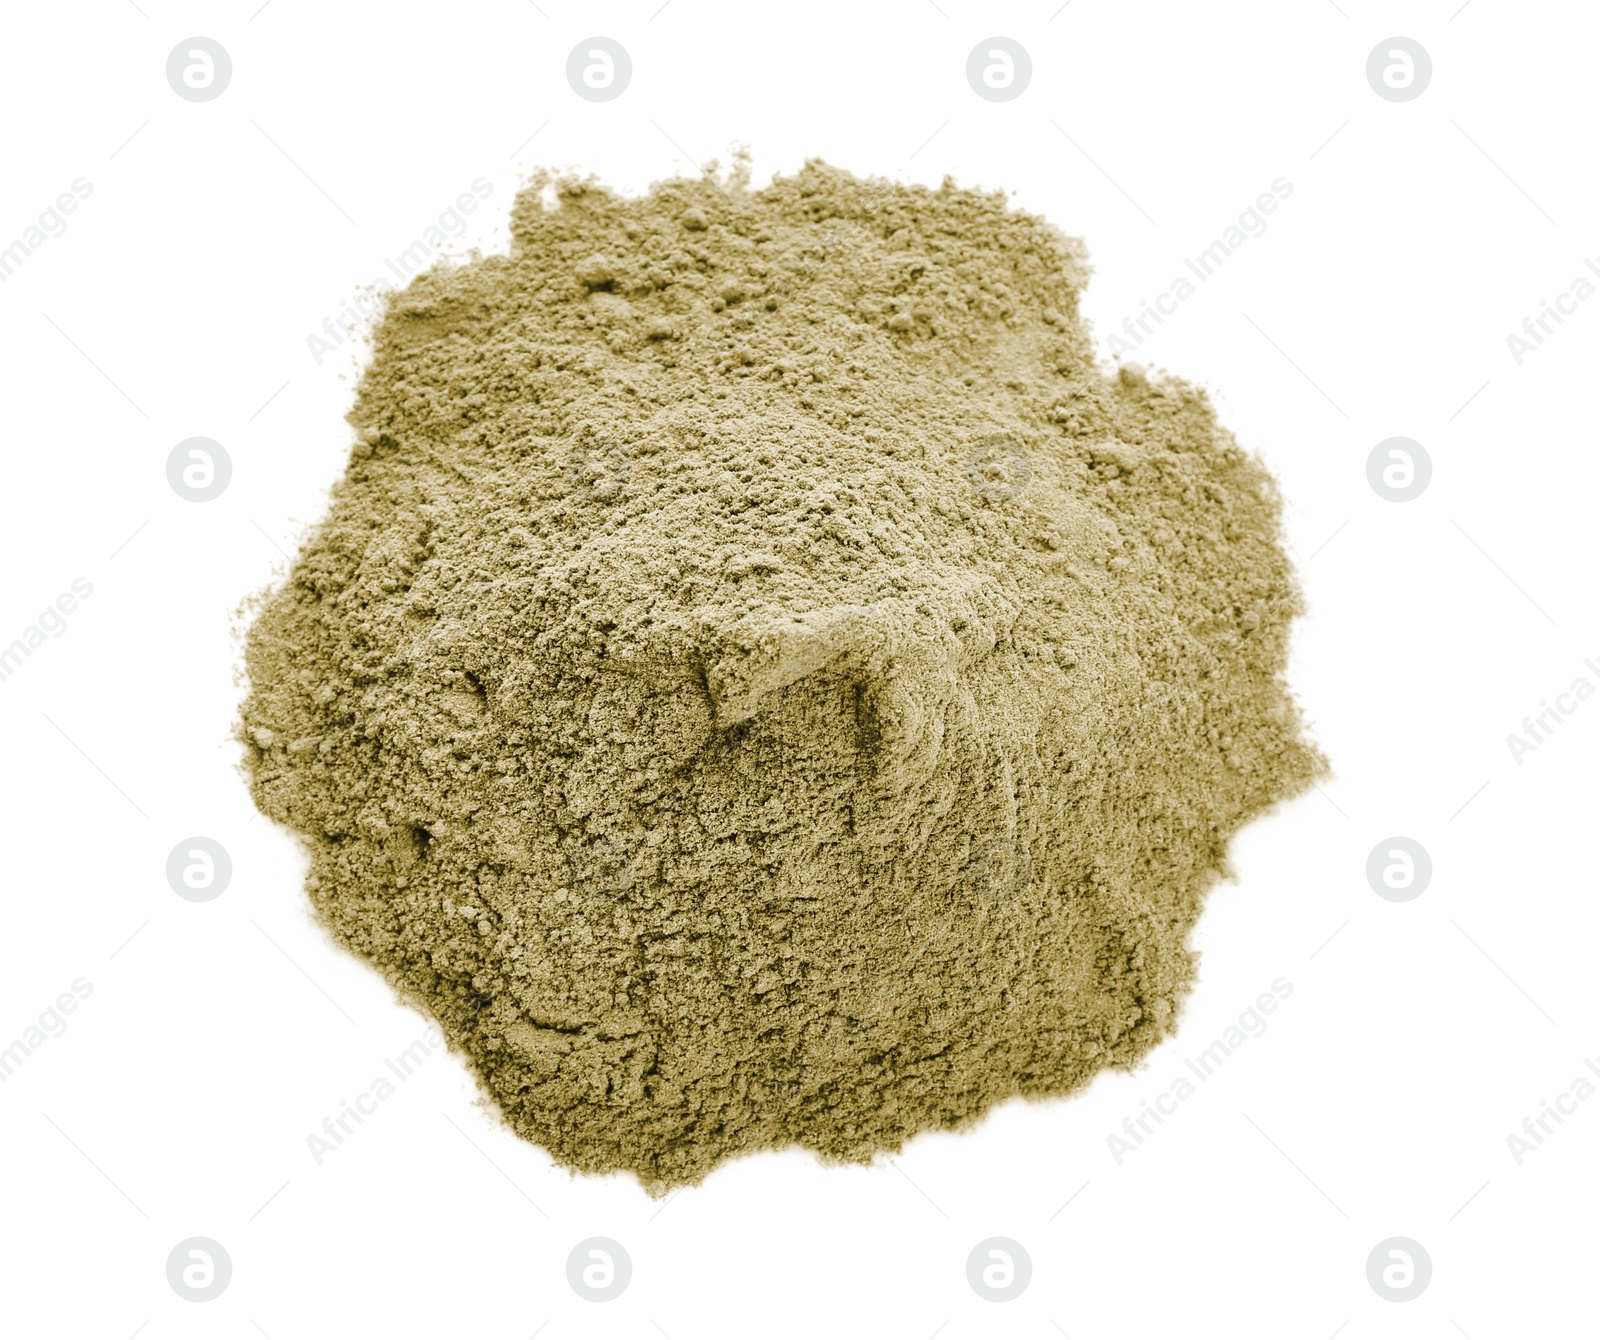 Photo of Heap of hemp protein powder on white background, top view